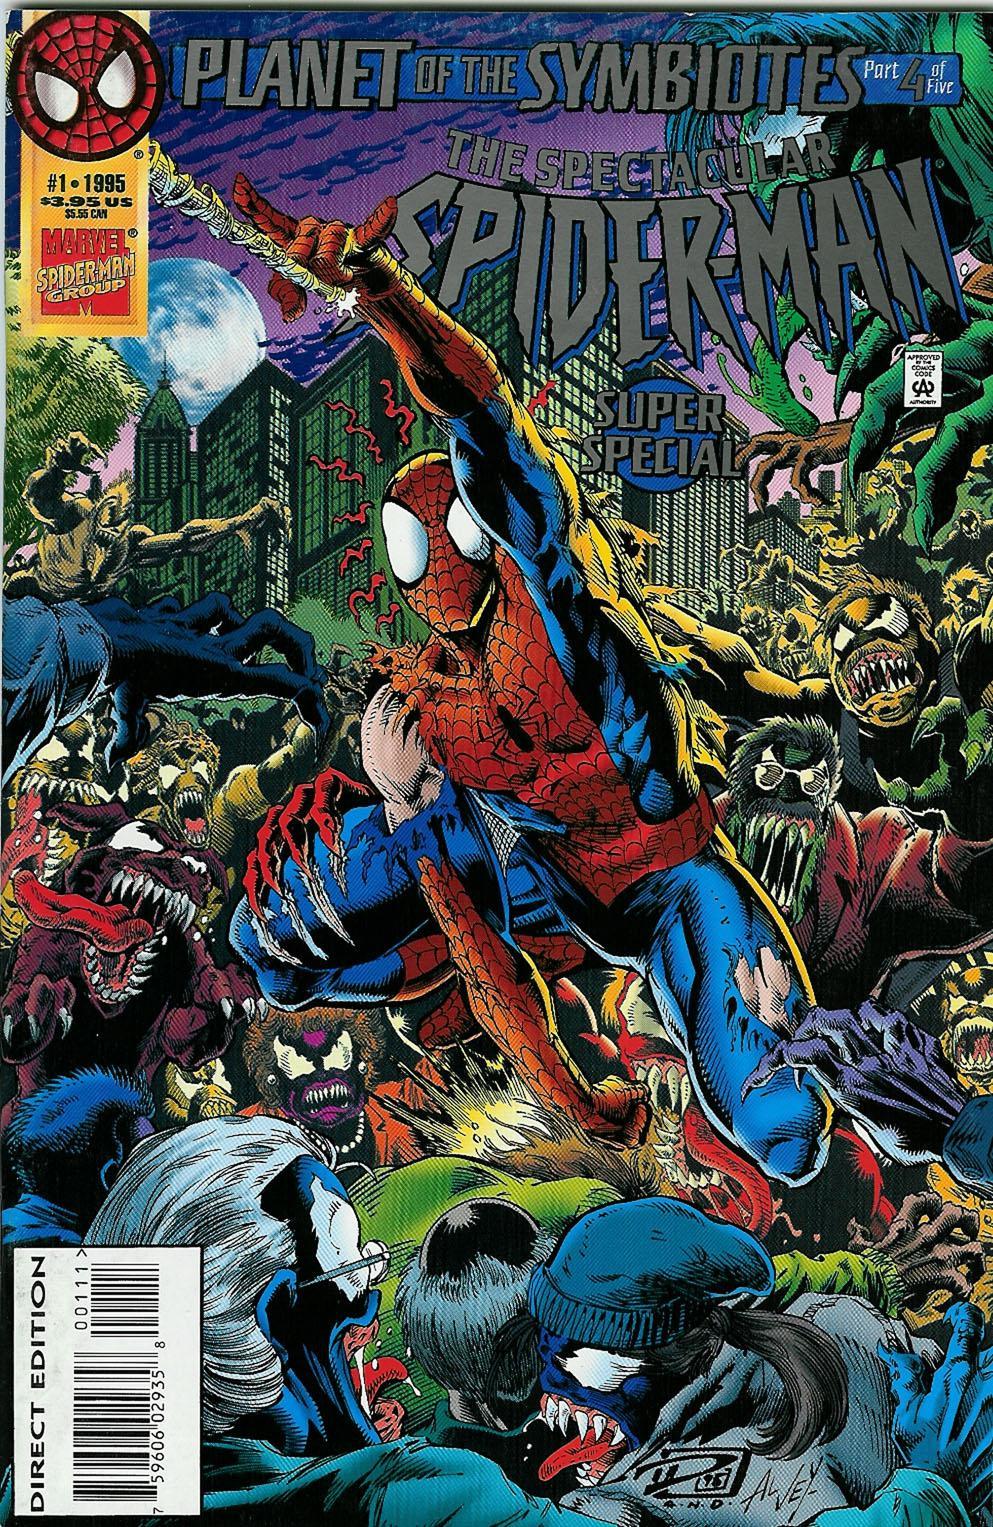 Spectacular Spider-Man Super Special Vol. 1 #1